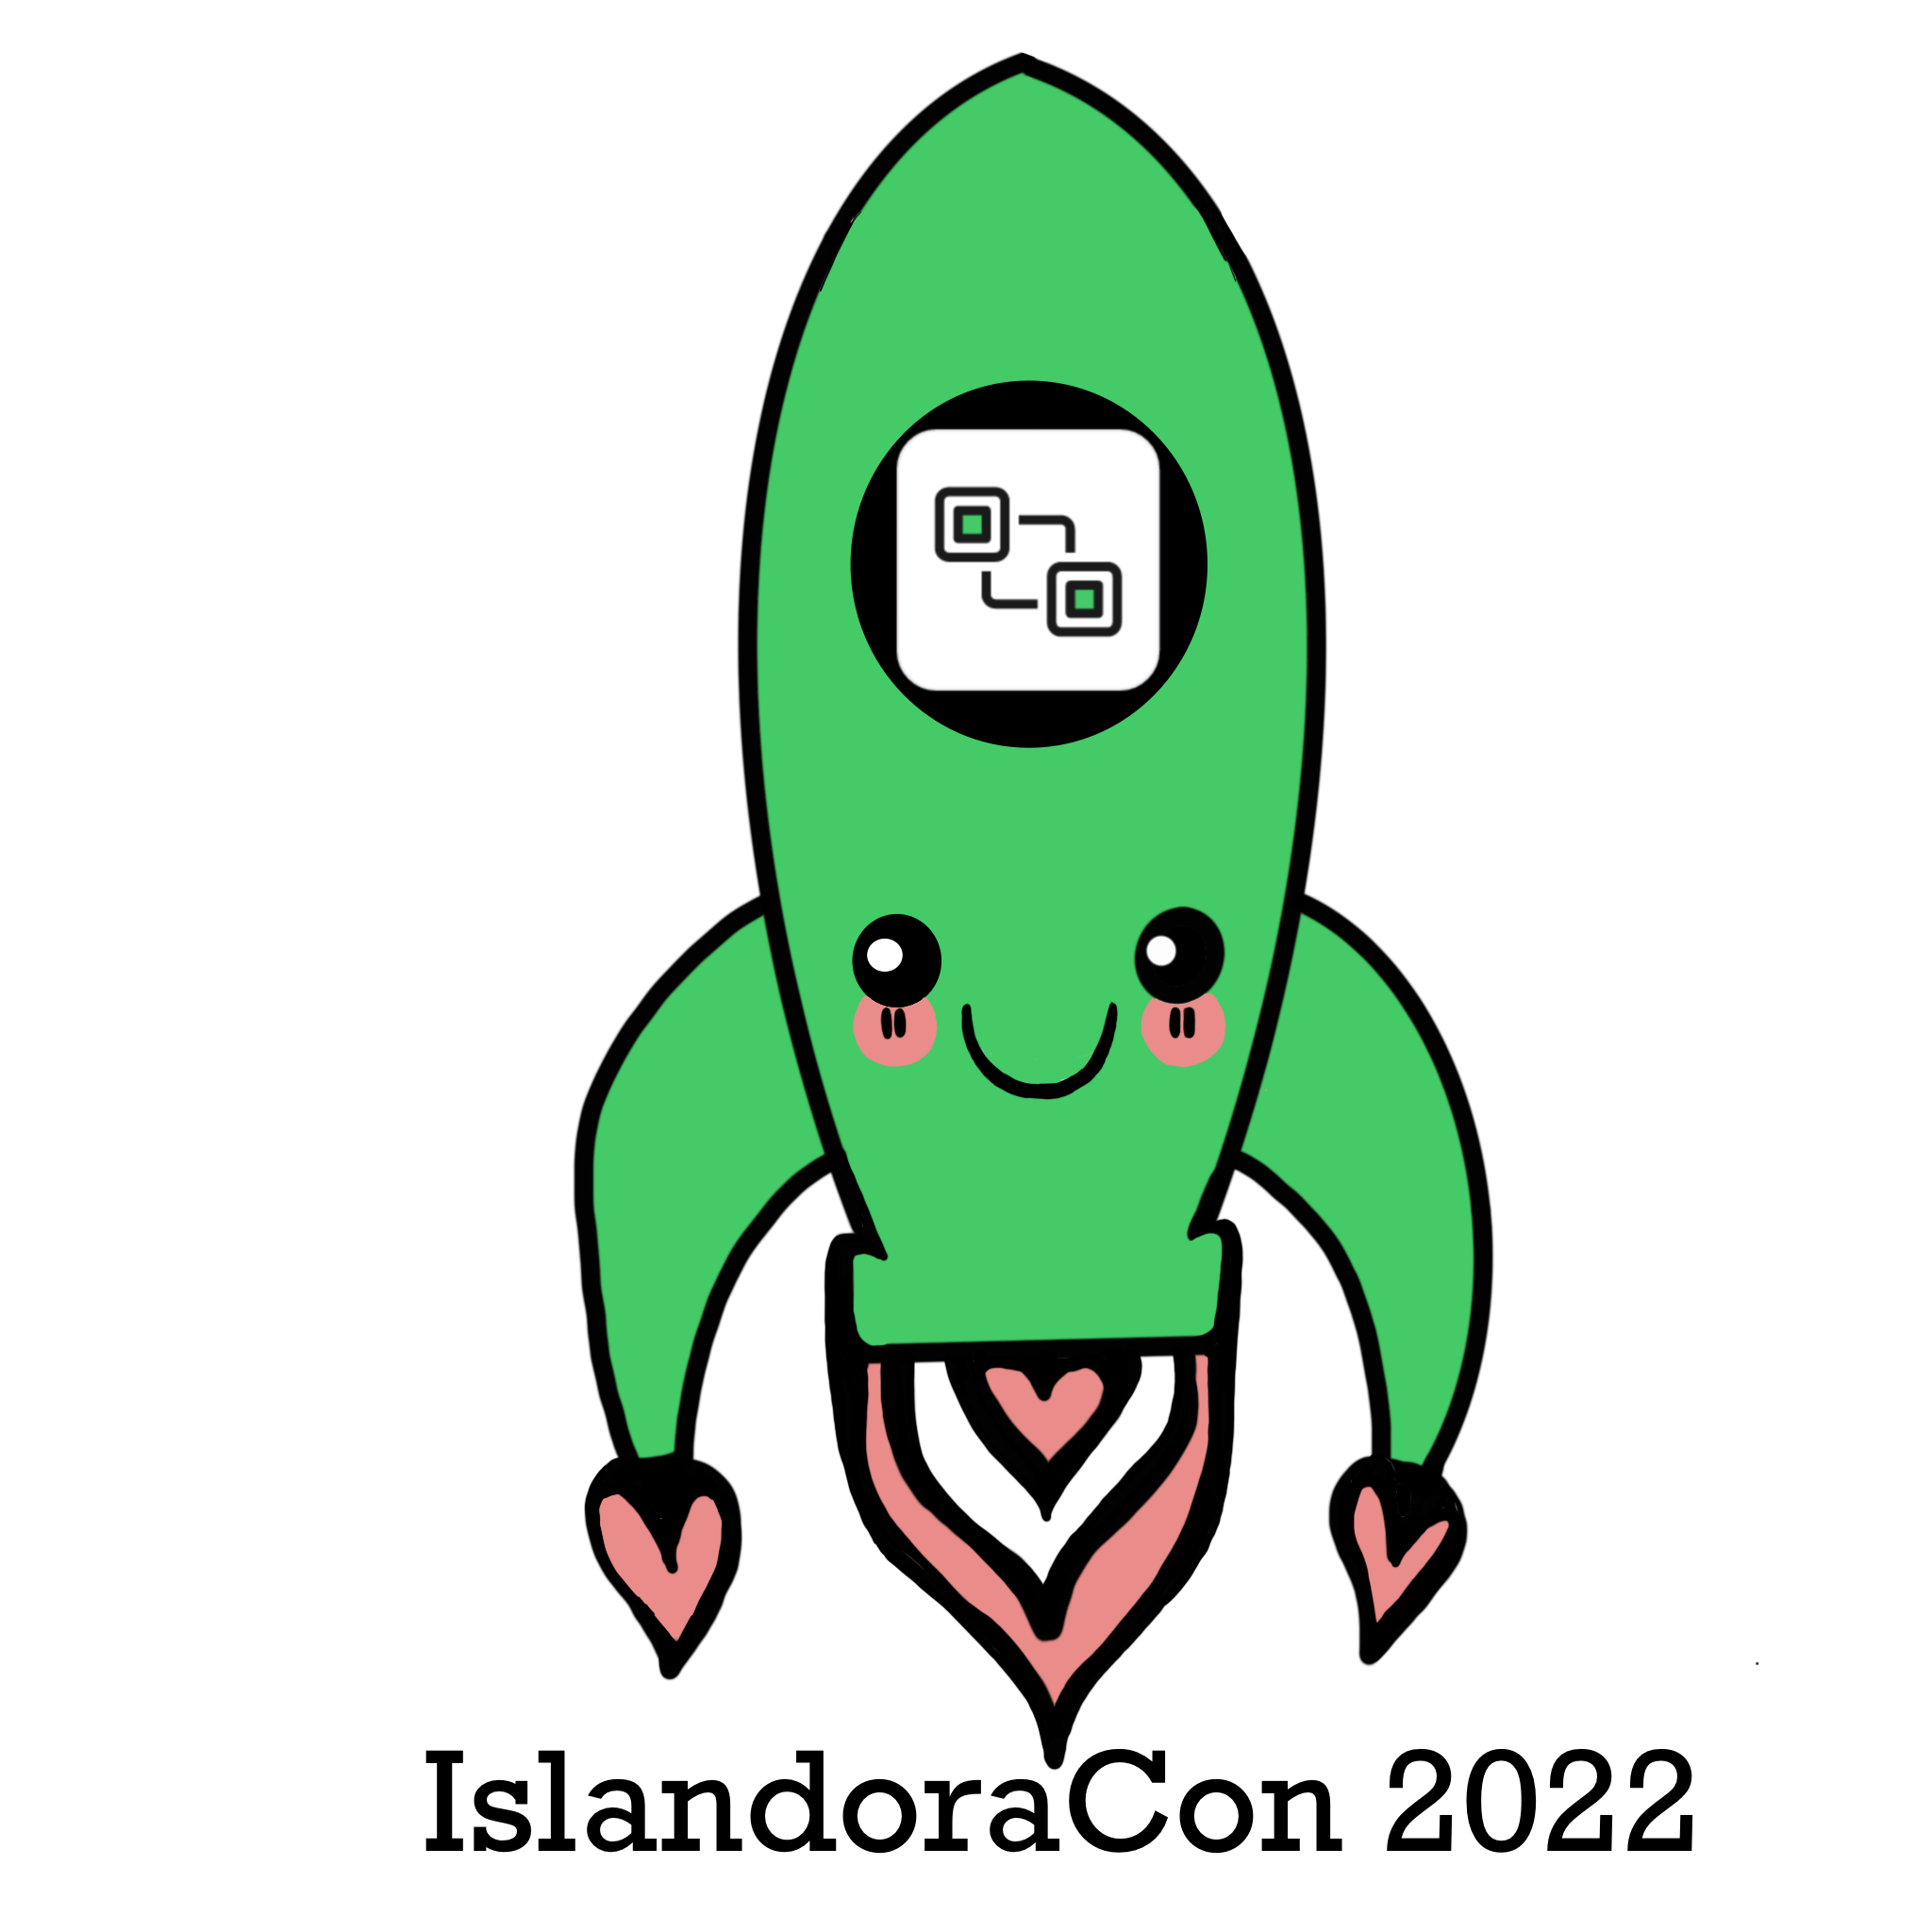 A cute green islandora spaceship with eyes is taking off